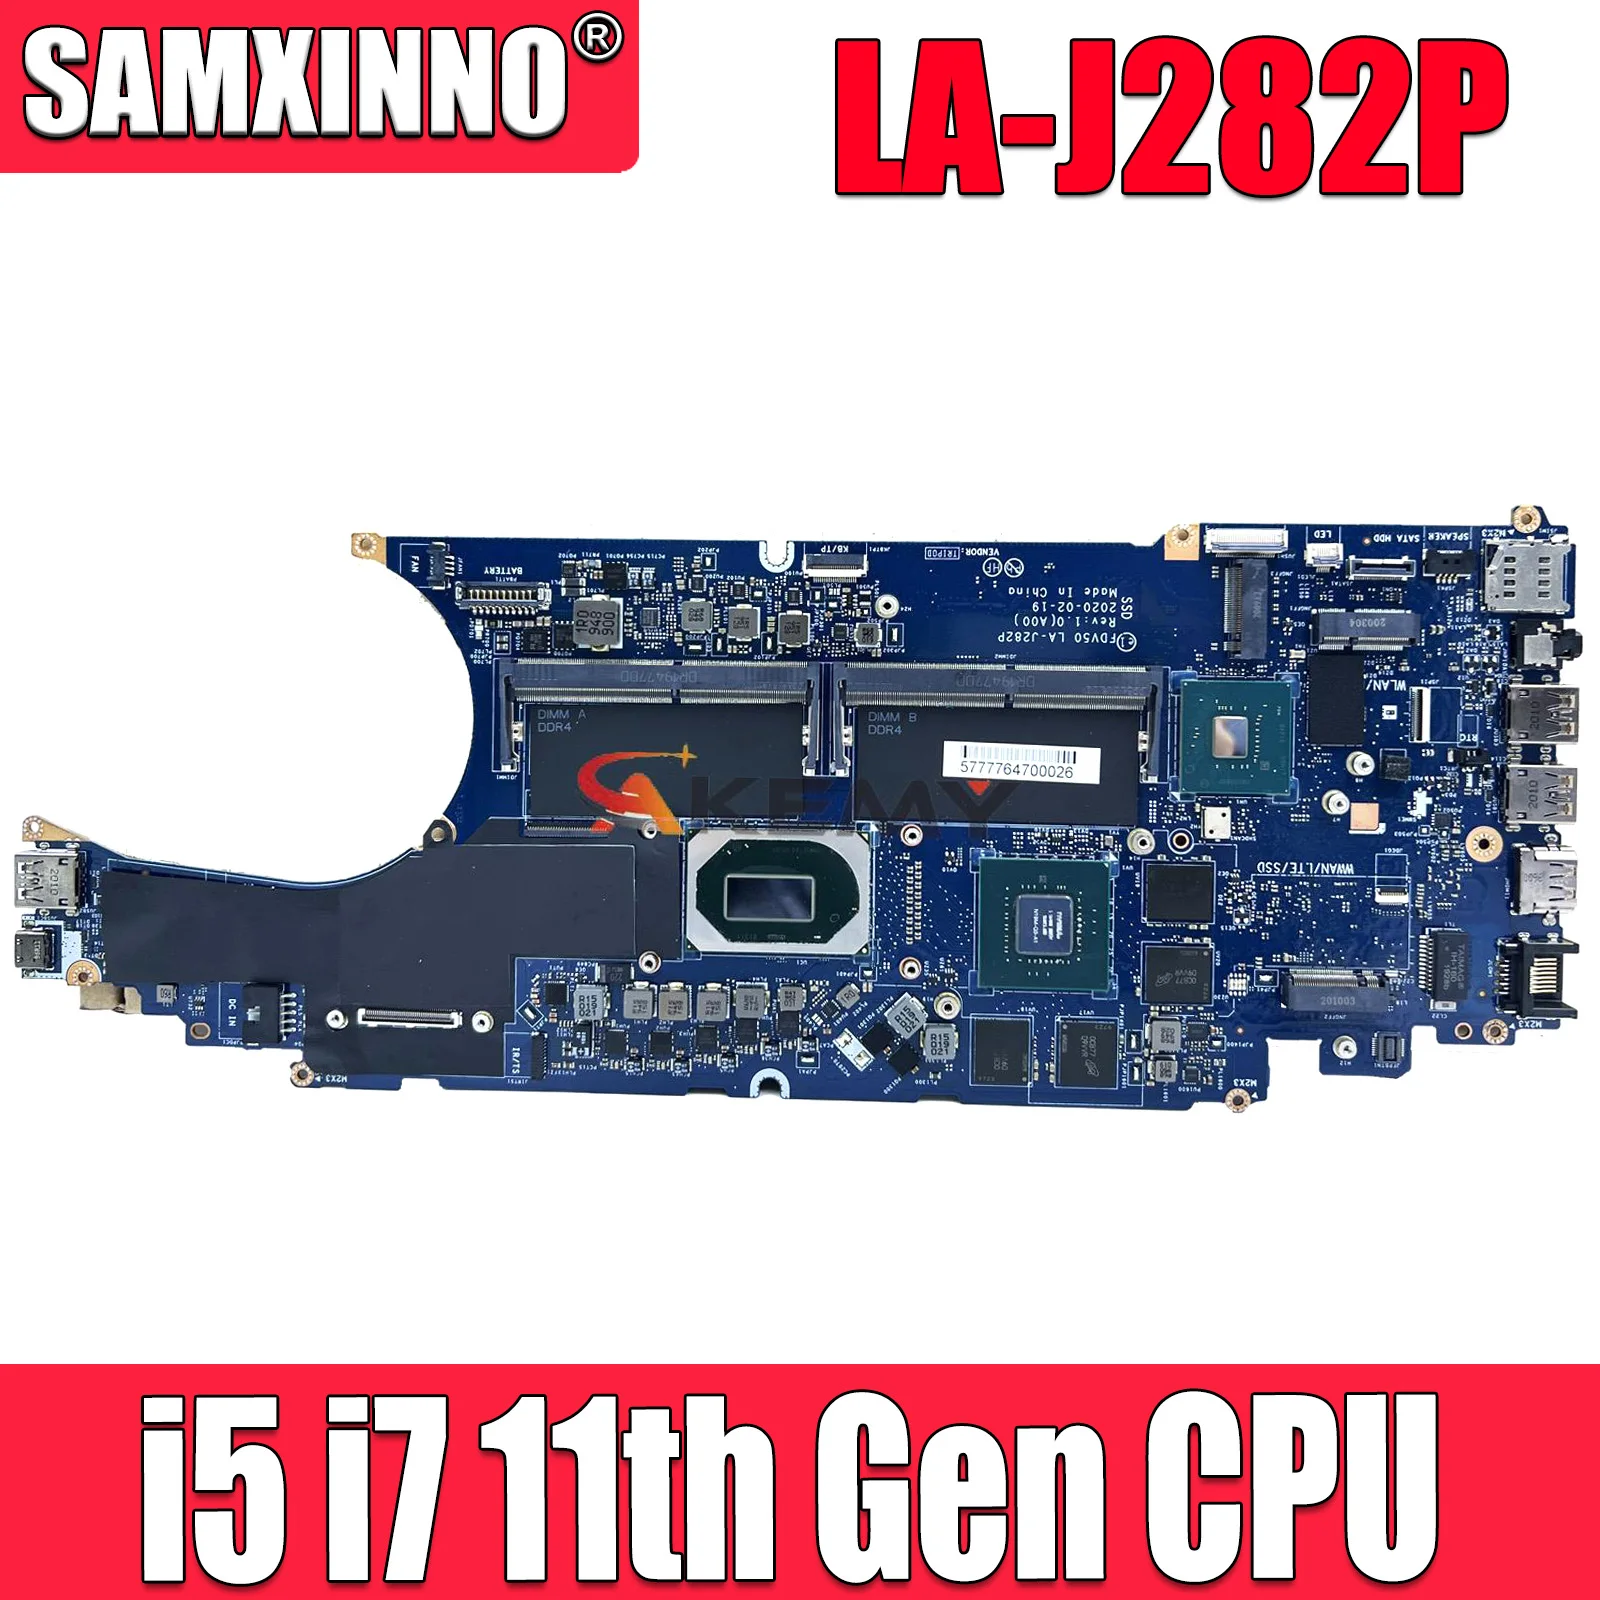 

CN-033T3Y CN-0JNTPG For Dell 3551 With i5-10400H I7-10750H CPU Mainboard FDV50 LA-J282P Laptop Motherboard N19M-Q3-A1 100% Test